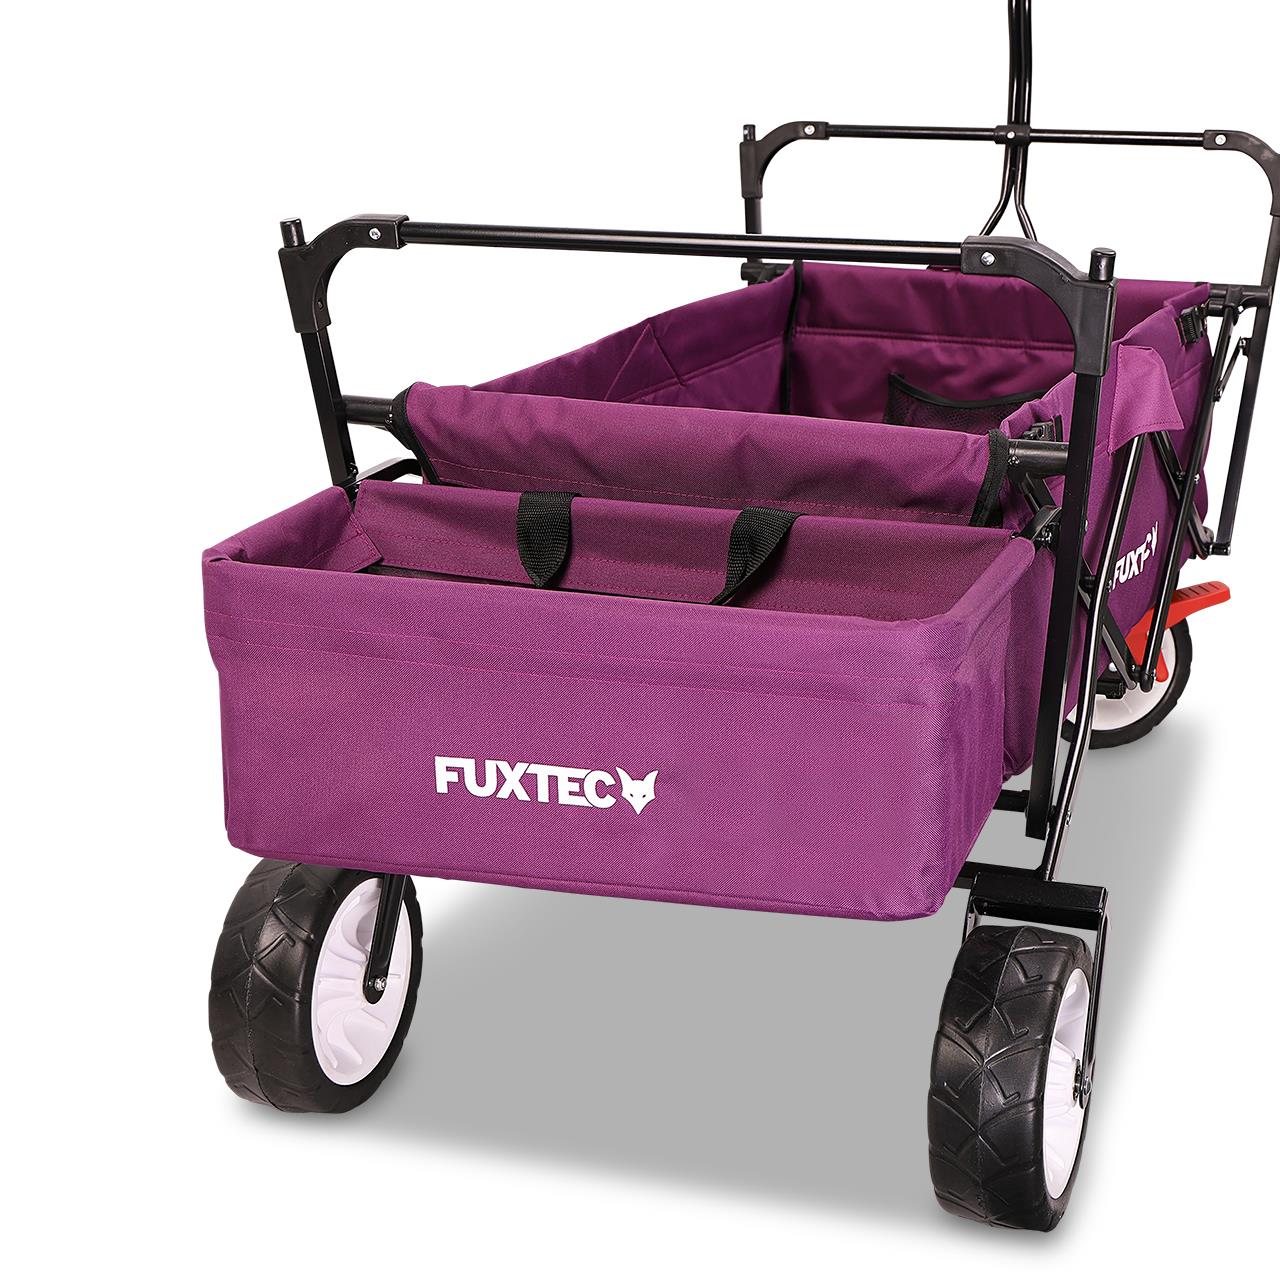 FUXTEC folding/foldable wagon CT350